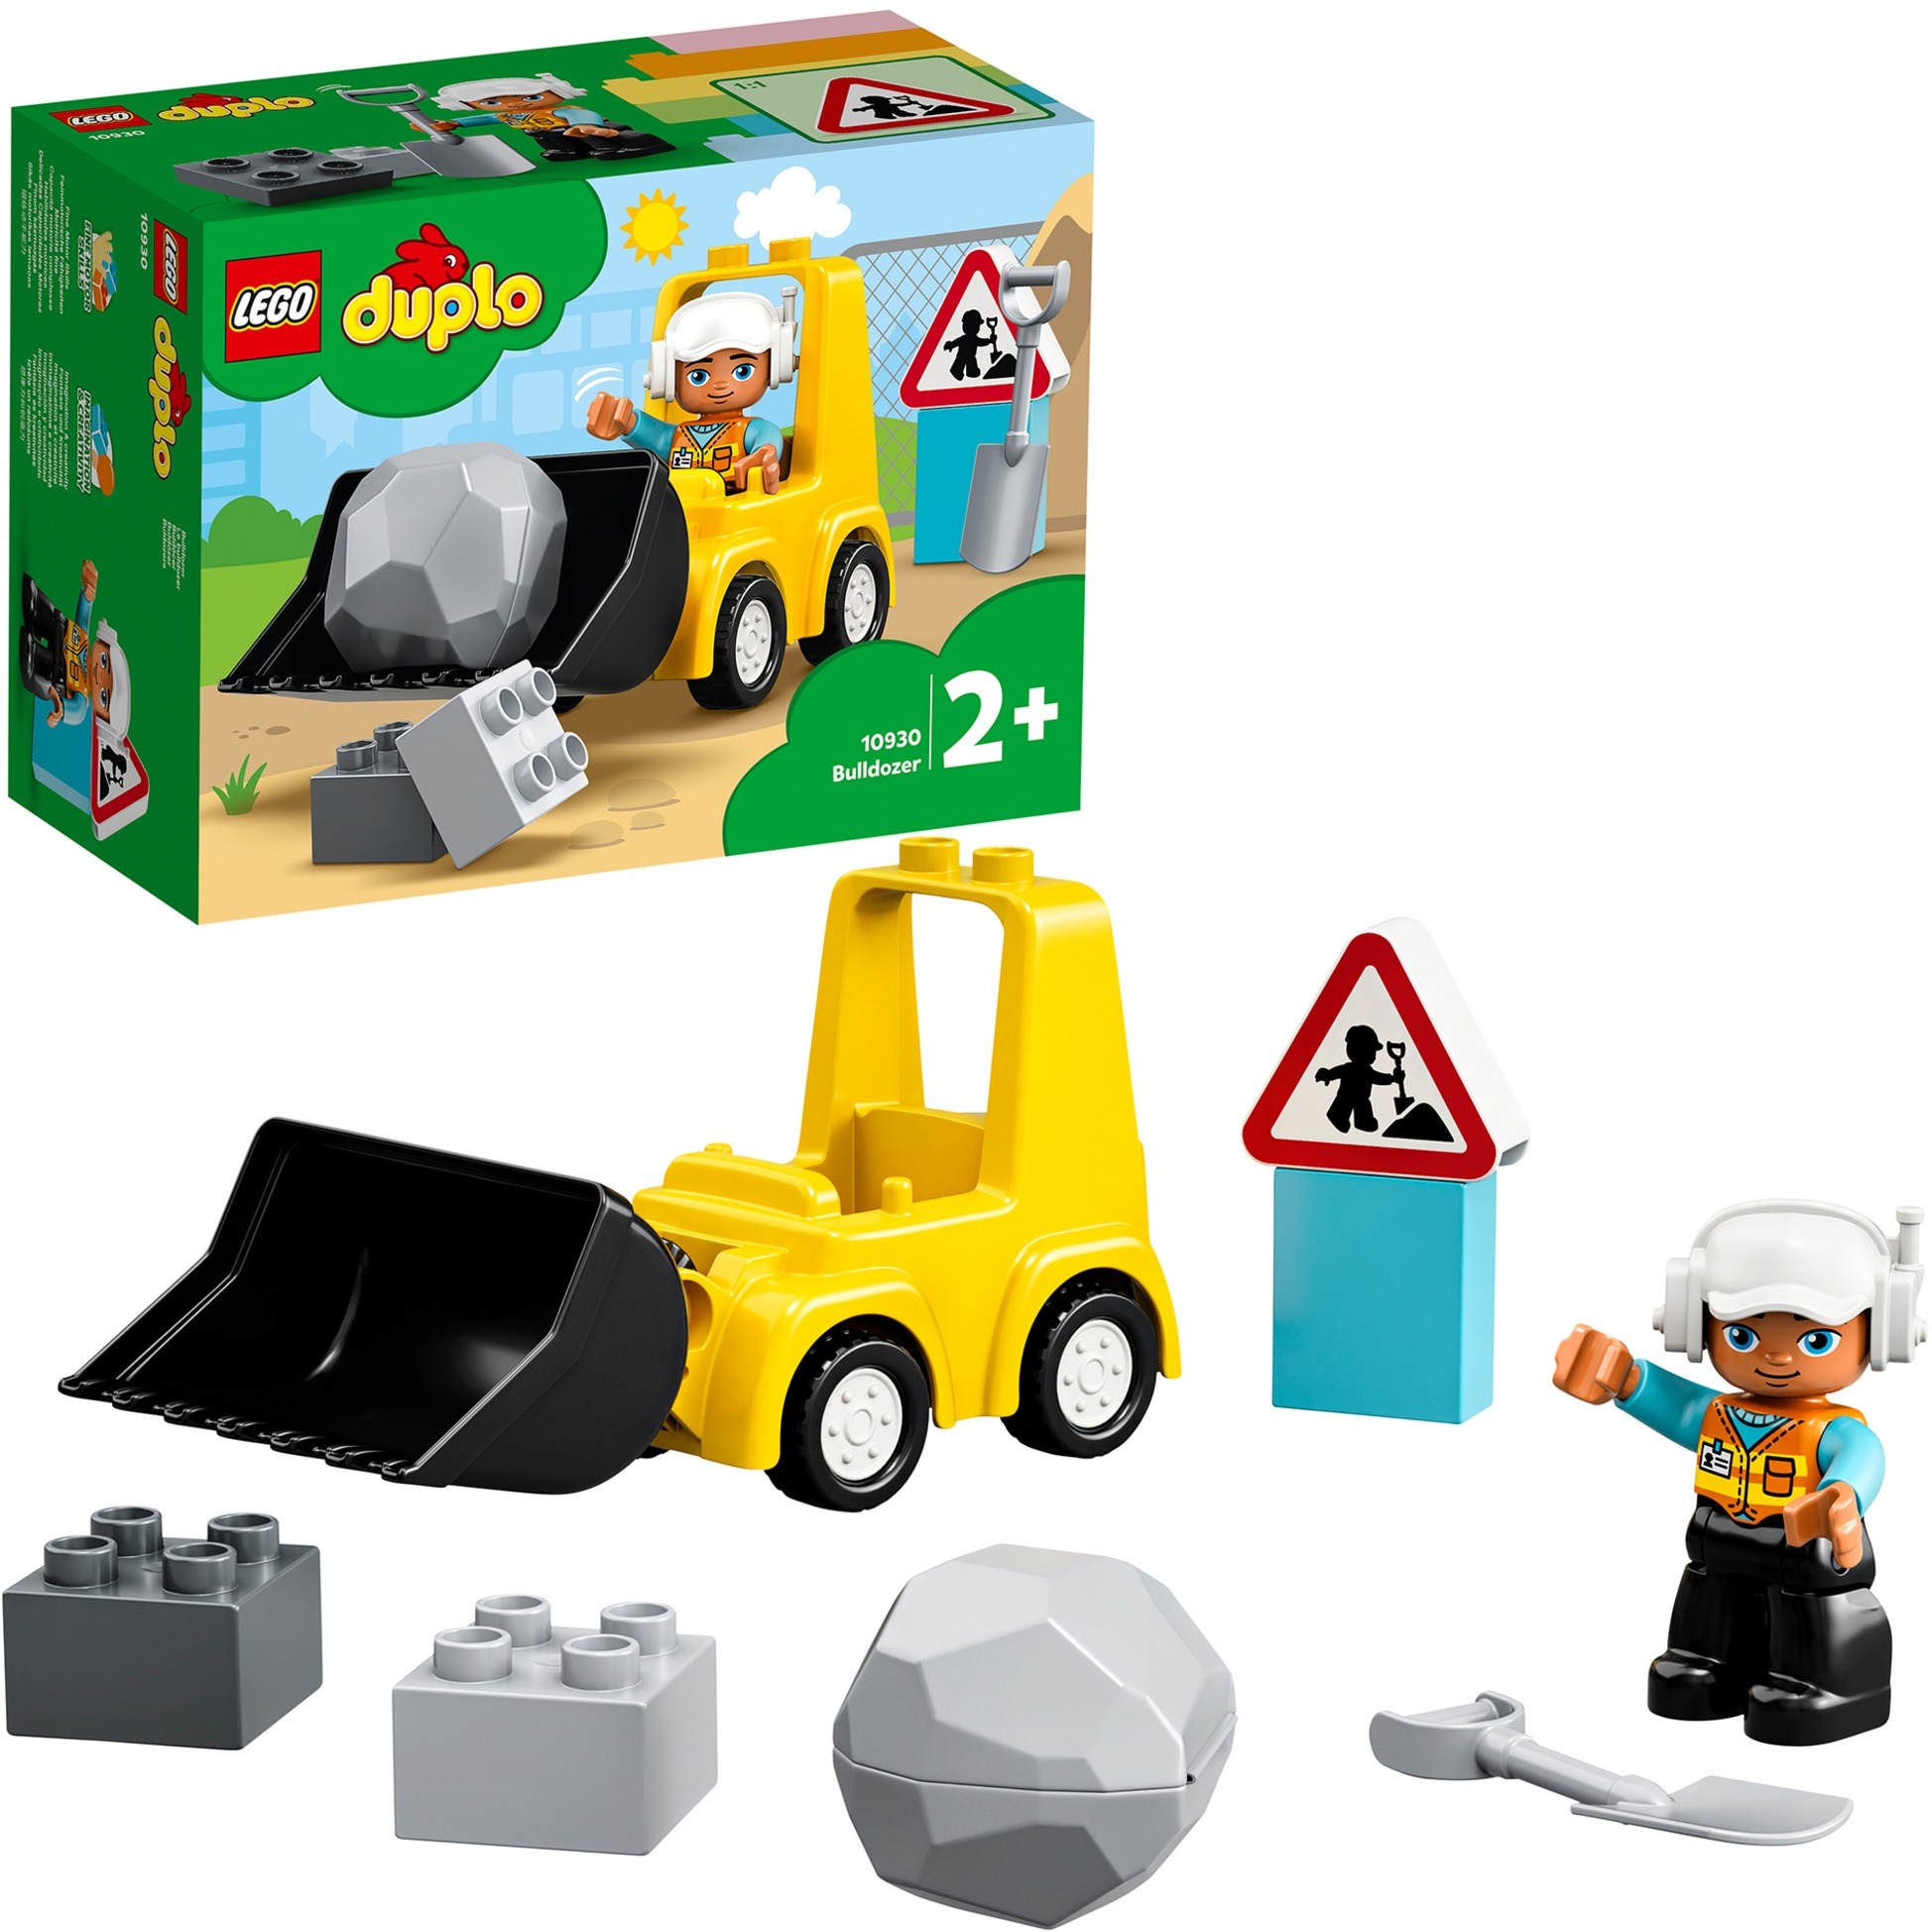 Spielzeug: Lego 10930 DUPLO Radlader